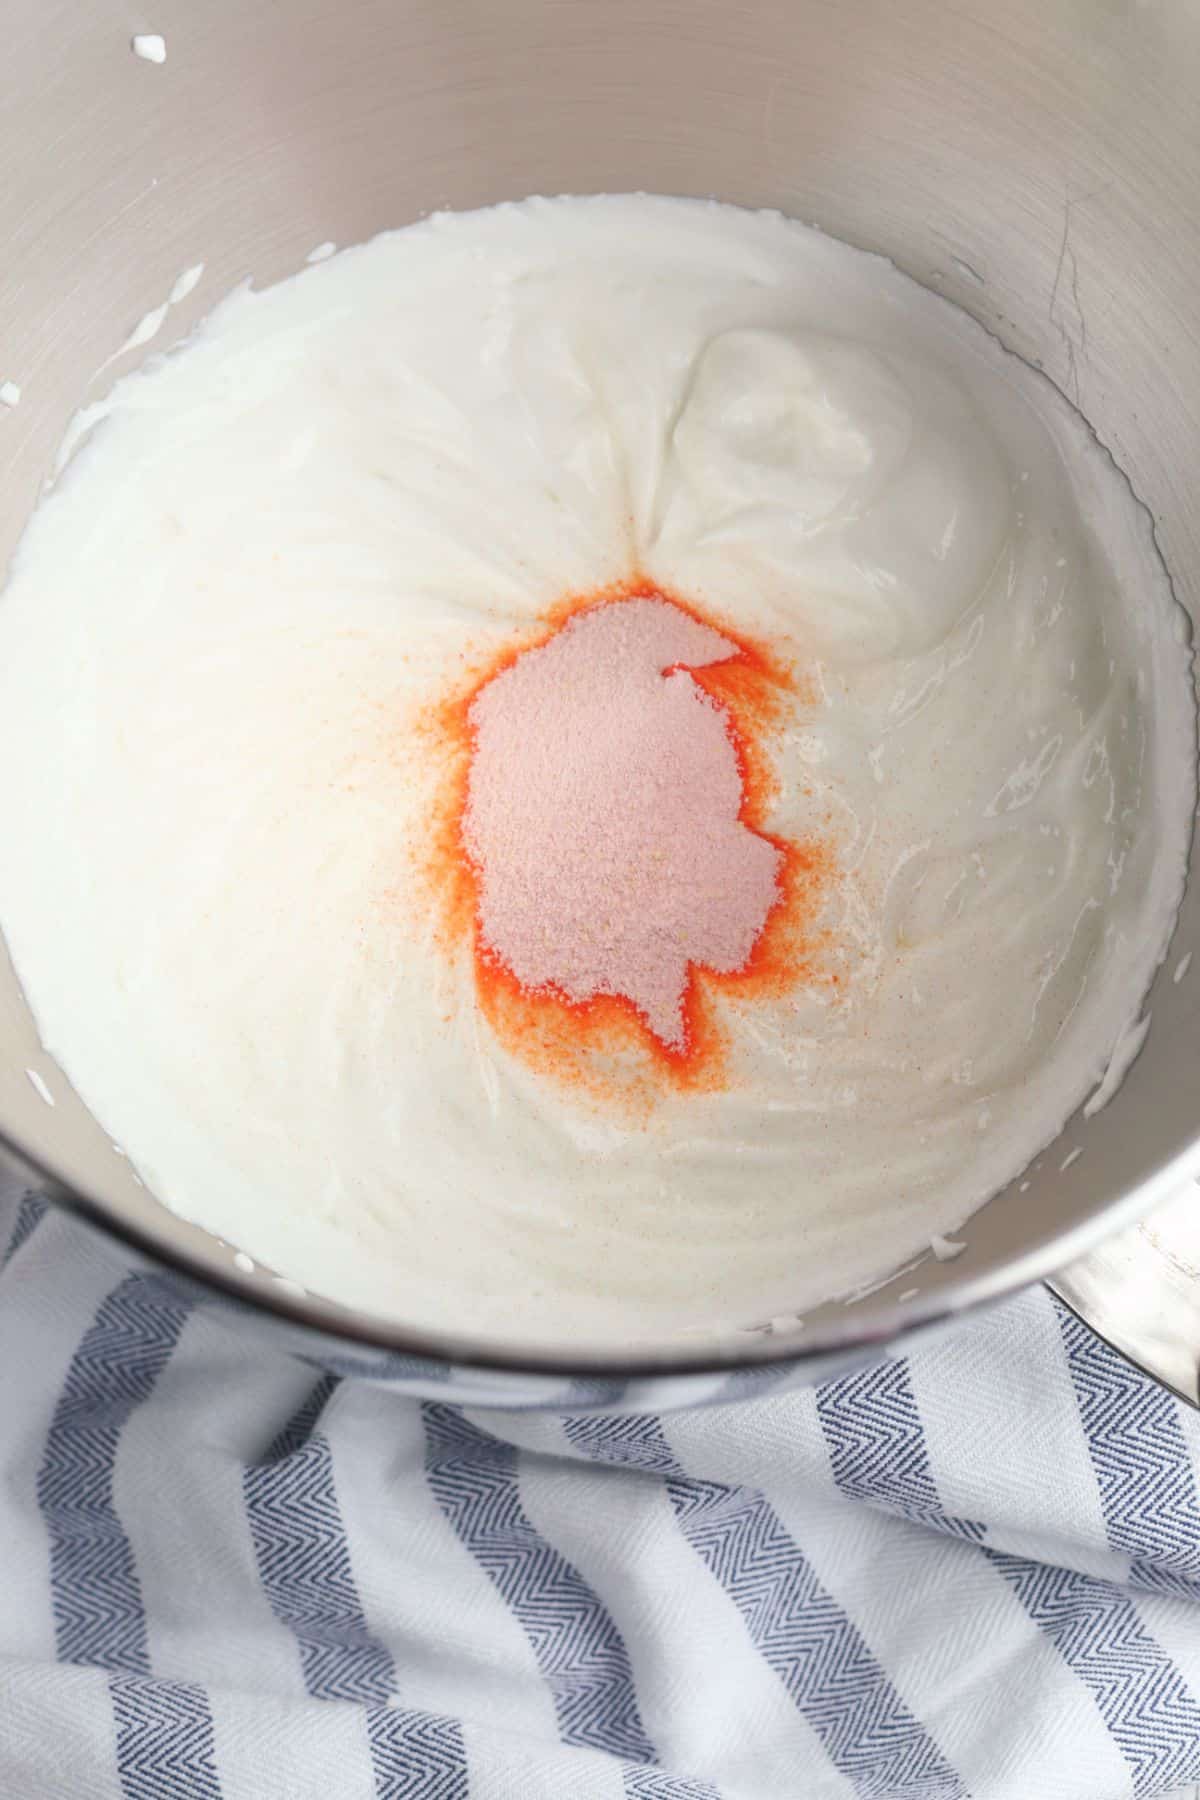 orange jello powder and Greek yogurt in a metal mixing bowl on a striped blue cloth.